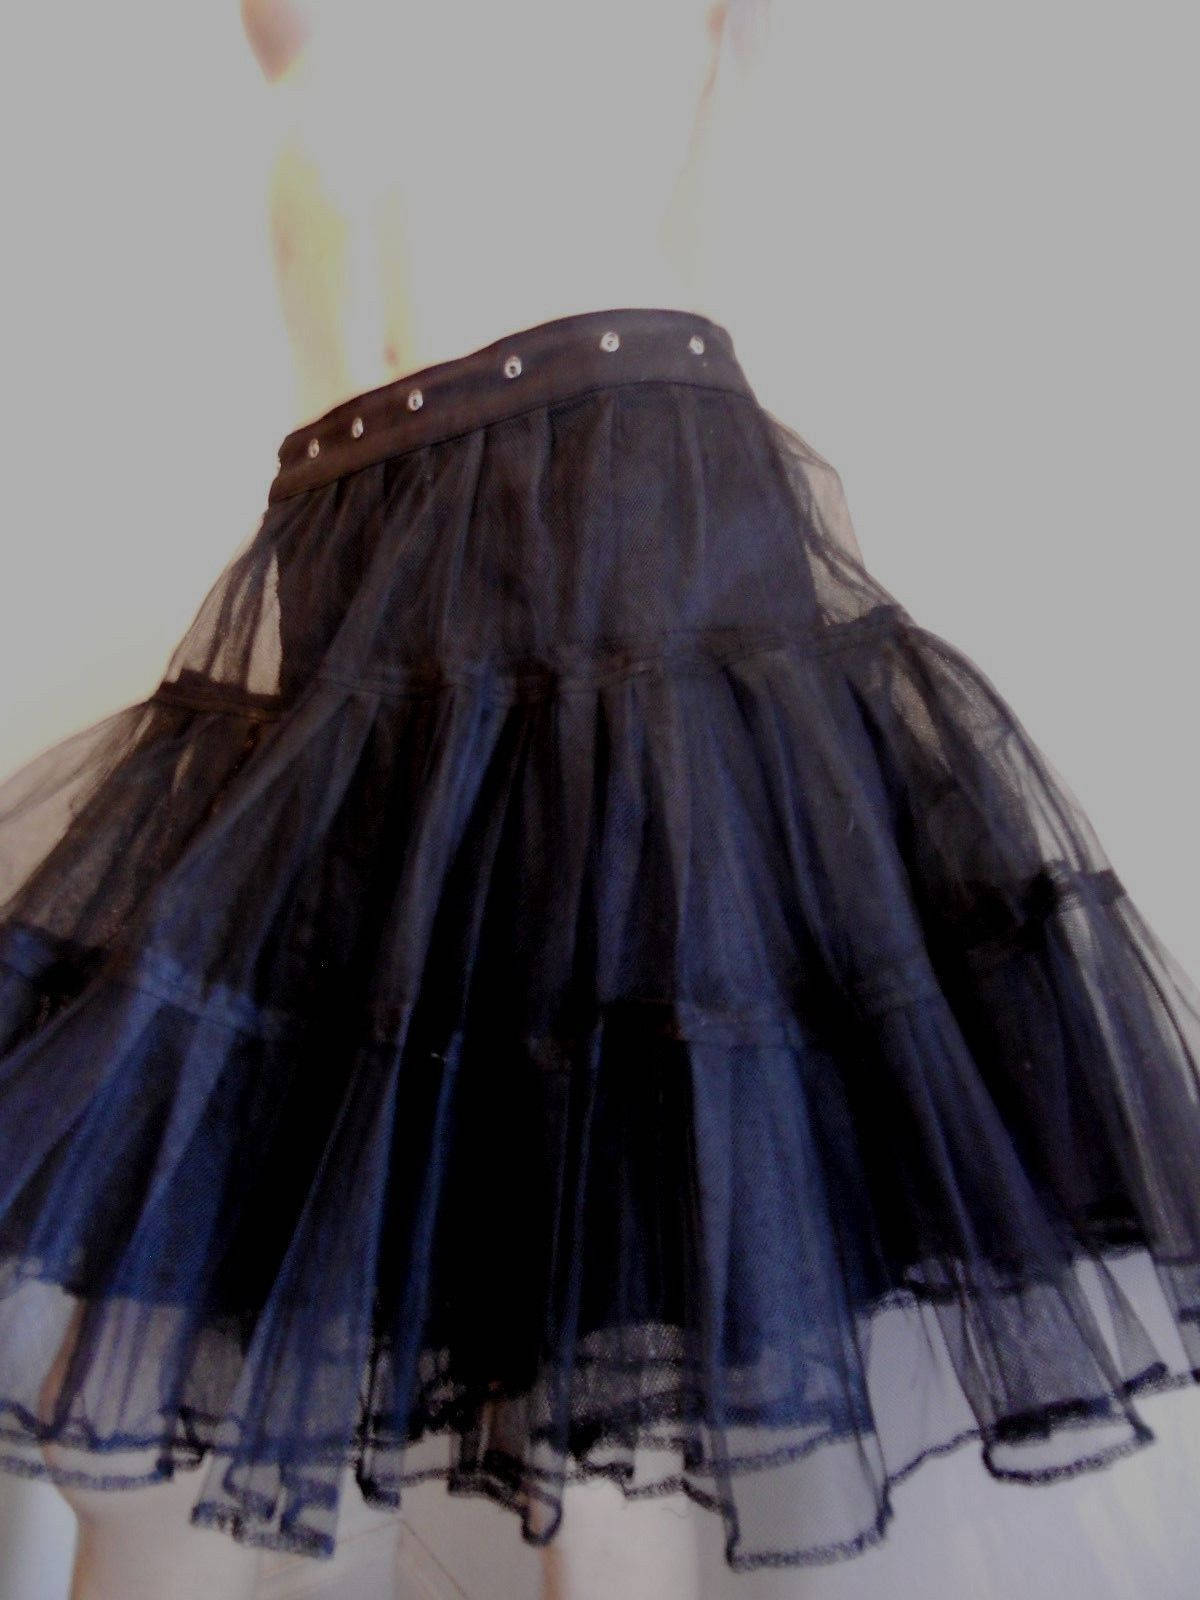 Stunning black net victorian style/punk/steampunk/glamour/performance/style skirt. Size 12 Wonkey Donkey Bazaar